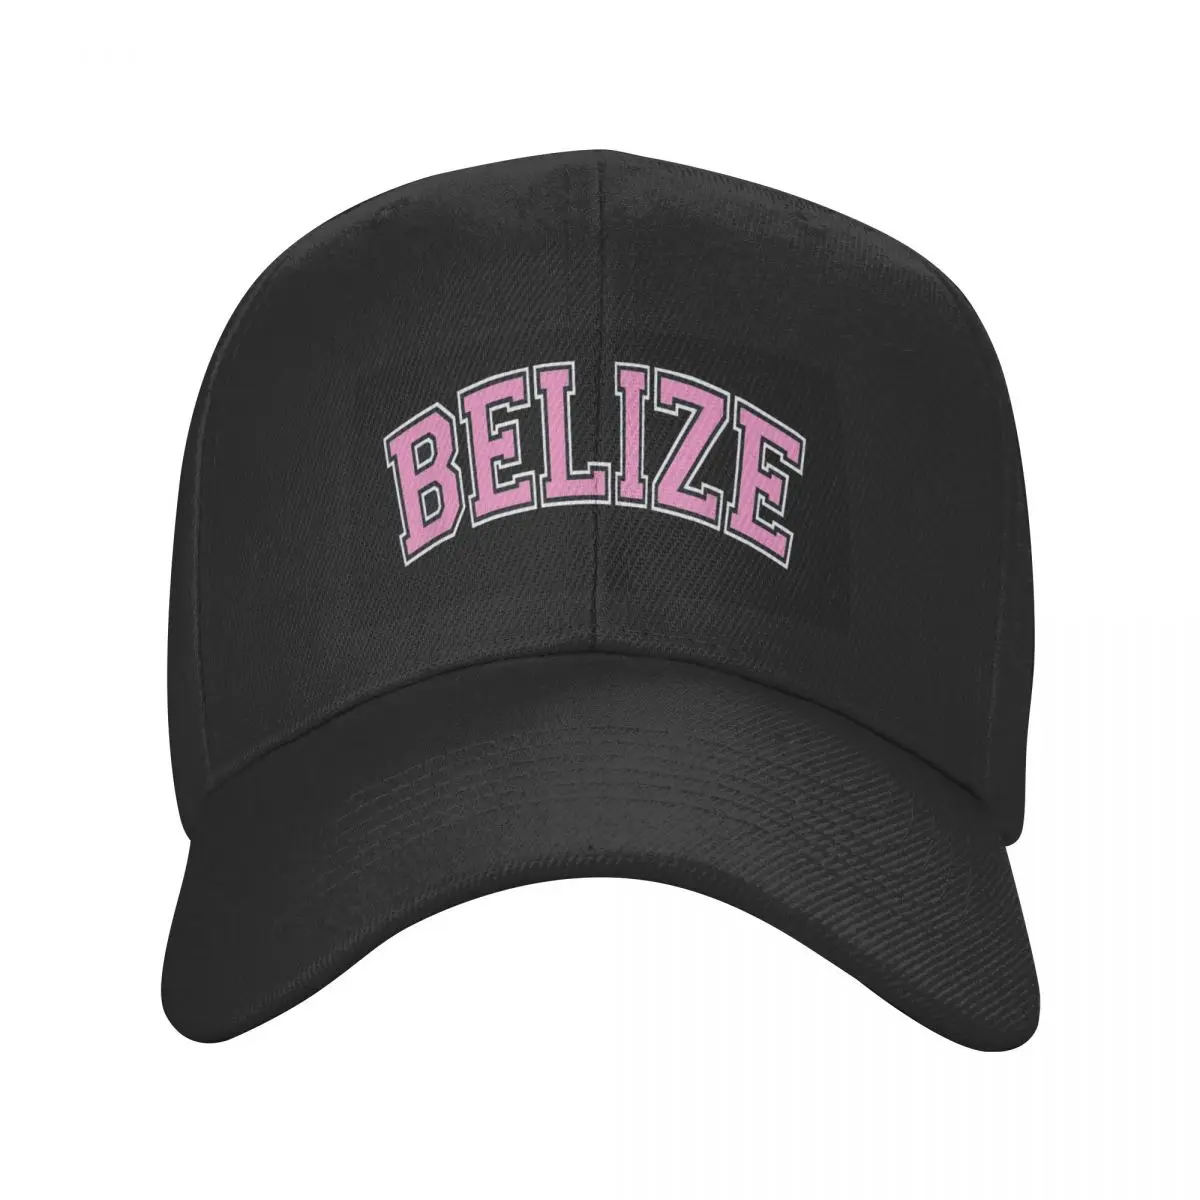 https://ae01.alicdn.com/kf/S0ebe975f493f4504bb652ac8eb0a0cc0W/More-Design-Belizean-Gift-Belize-Country-Map-Flag-Summer-Sun-Baseball-Cap-Breathable-Adjustable-Outdoor-Fishing.jpg